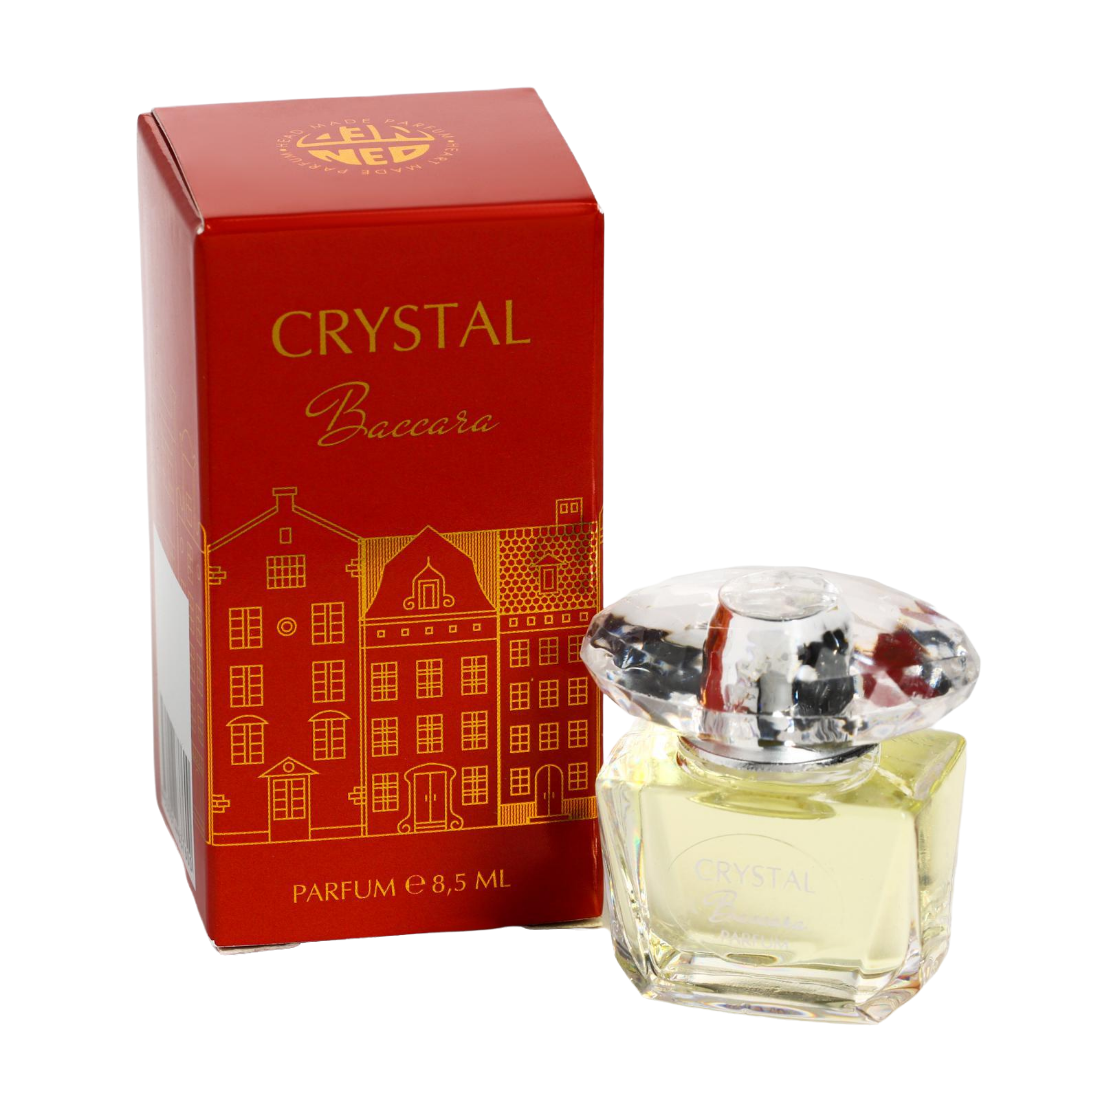 Купить Духи-мини Crystal Baccara, женские, 6 мл 7149830, Crystal Baccara Woman 6 мл, Neo Parfum